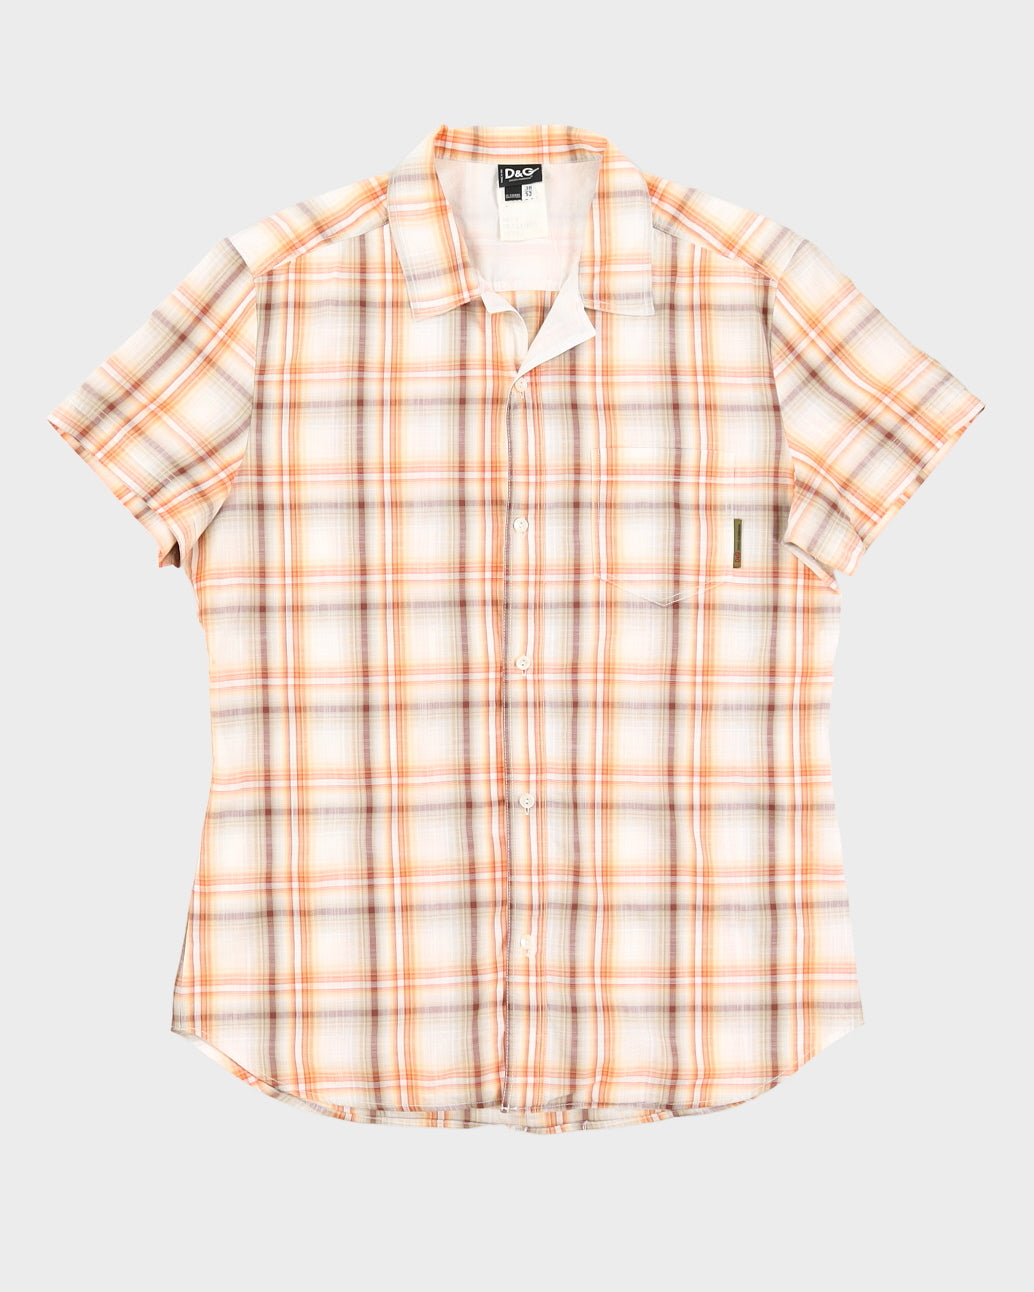 00s Dolce & Gabbana Orange Check Shirt - L